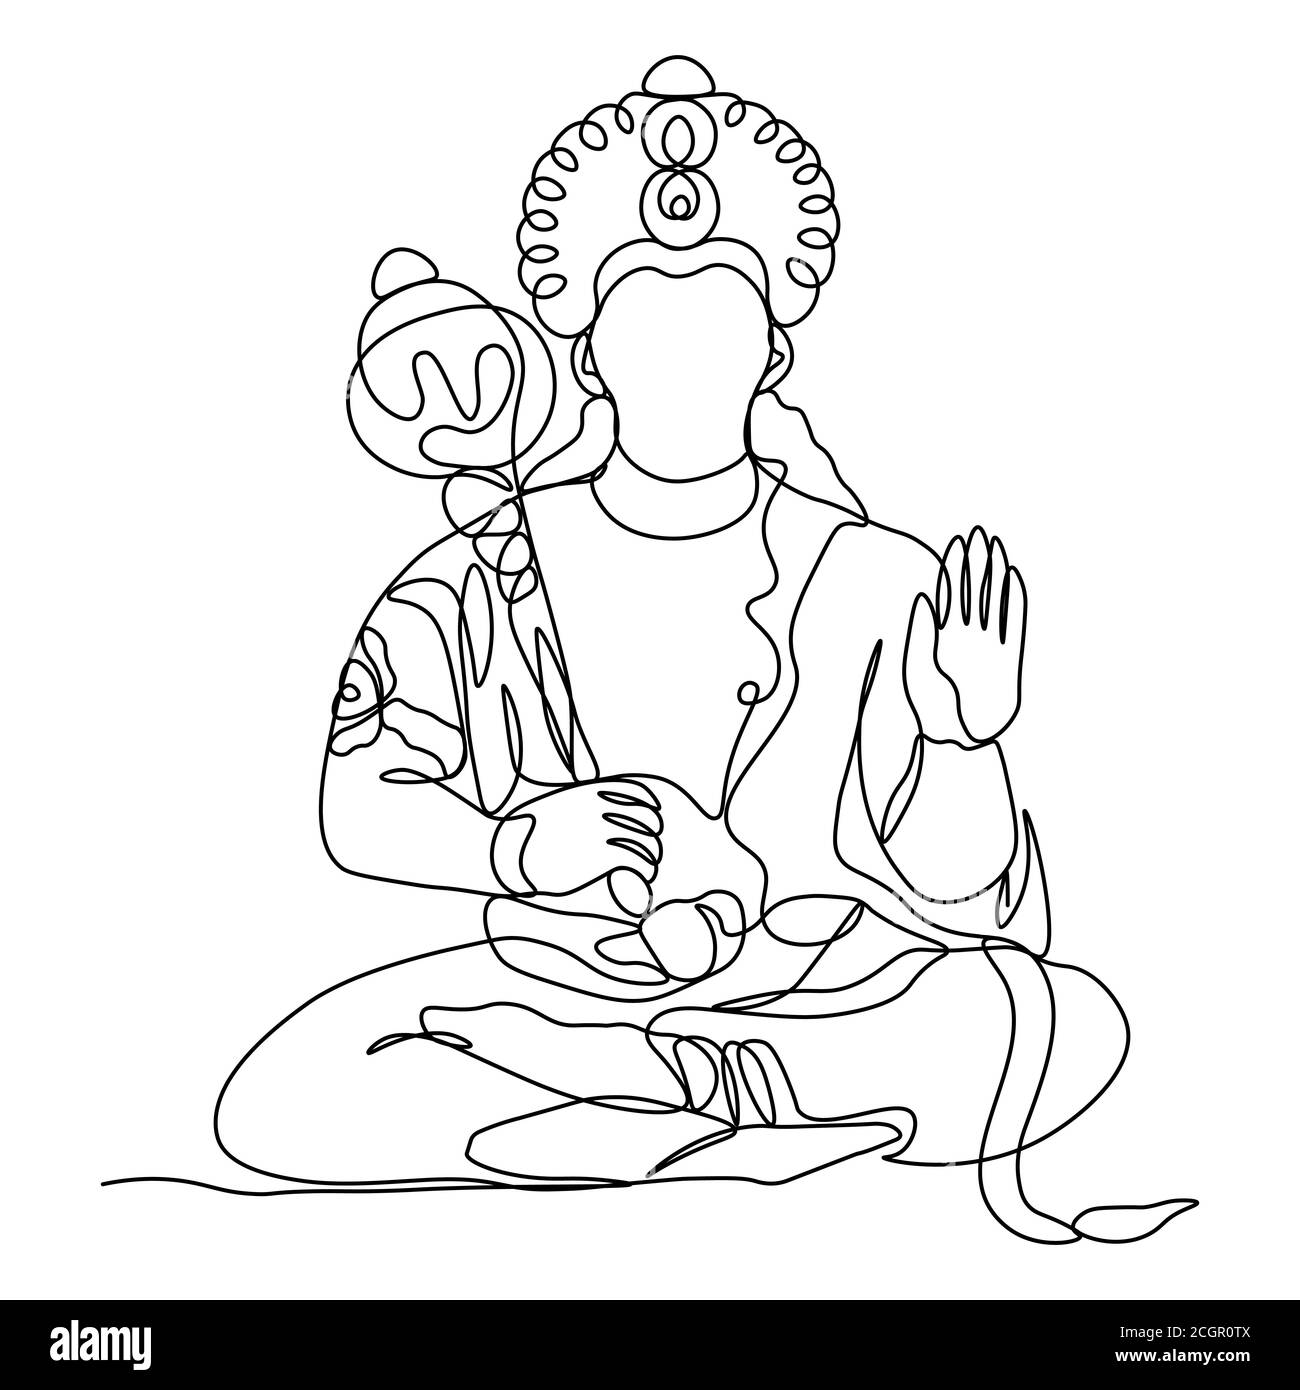 Hanuman drawing | Portrait drawing, Pencil sketch images, Cool art drawings